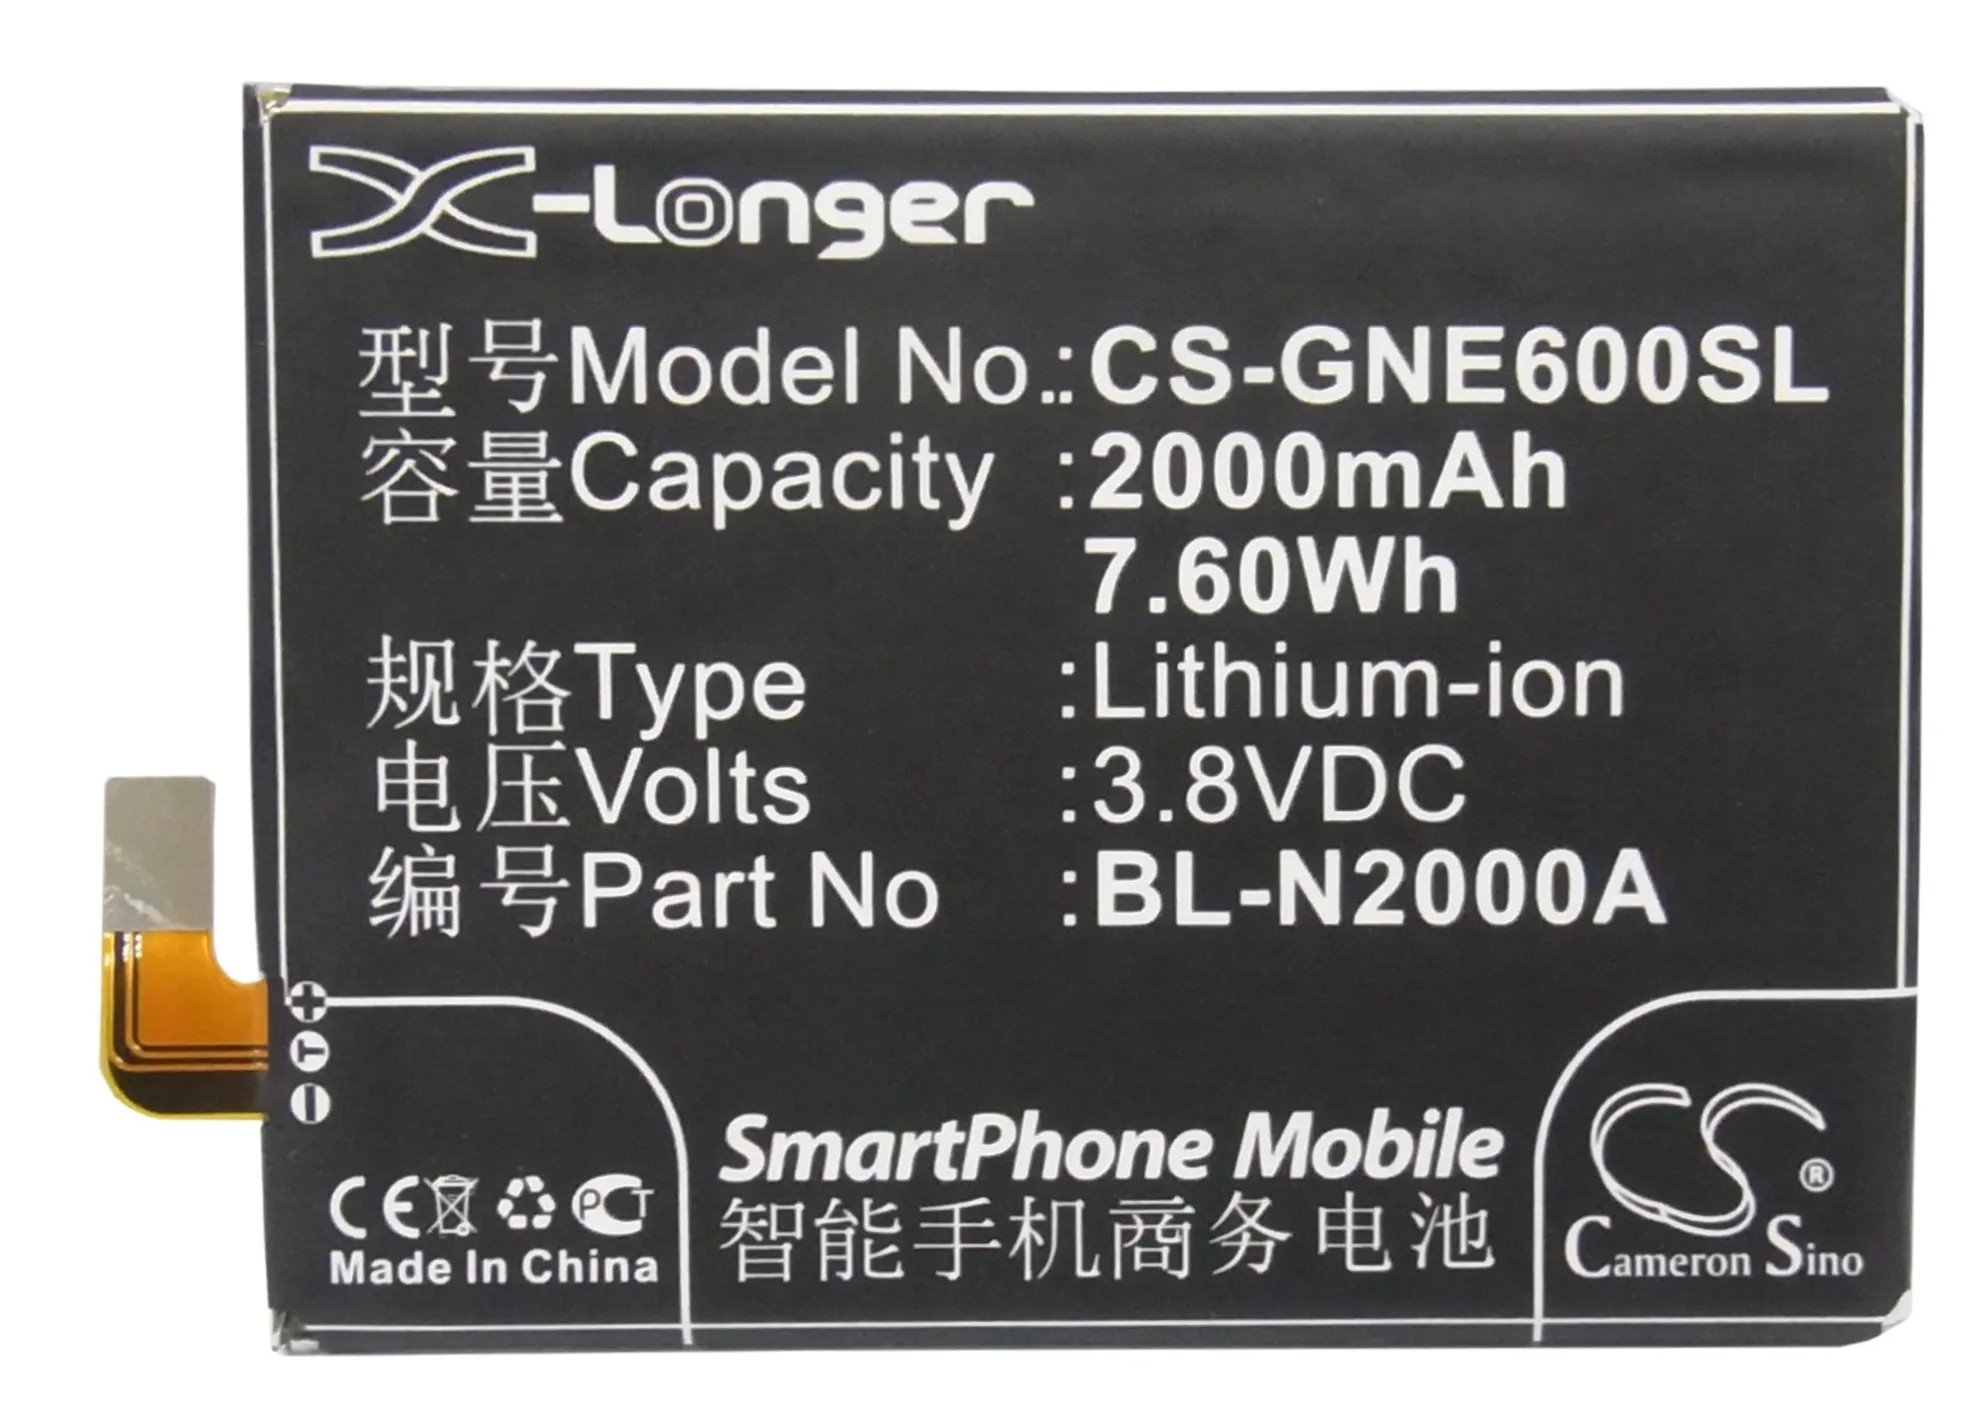 

Cameron Sino 2000mAh Battery BL-N2000A for Fly IQ453 Quad, Luminor FHD, for BLU L240A, L240i, Life Pure, for GIONEE E6, E6t